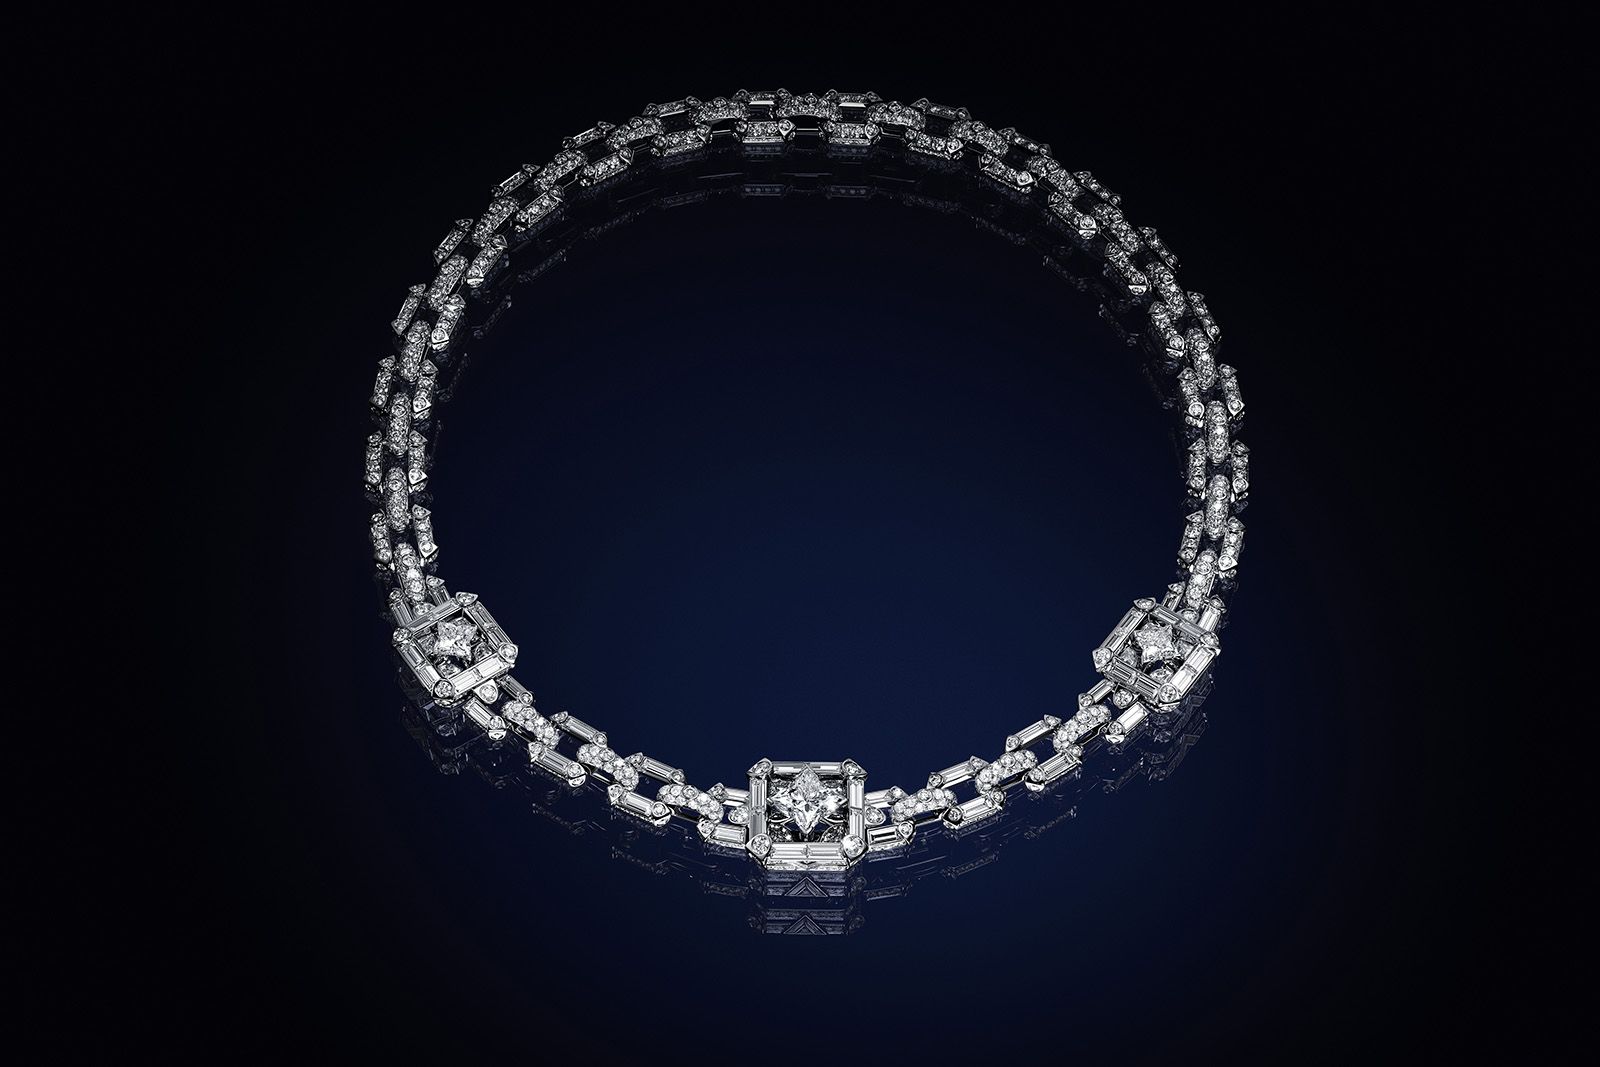 Louis Vuitton Diamond Yellow Gold Monogram Sautoir Detachable Necklace